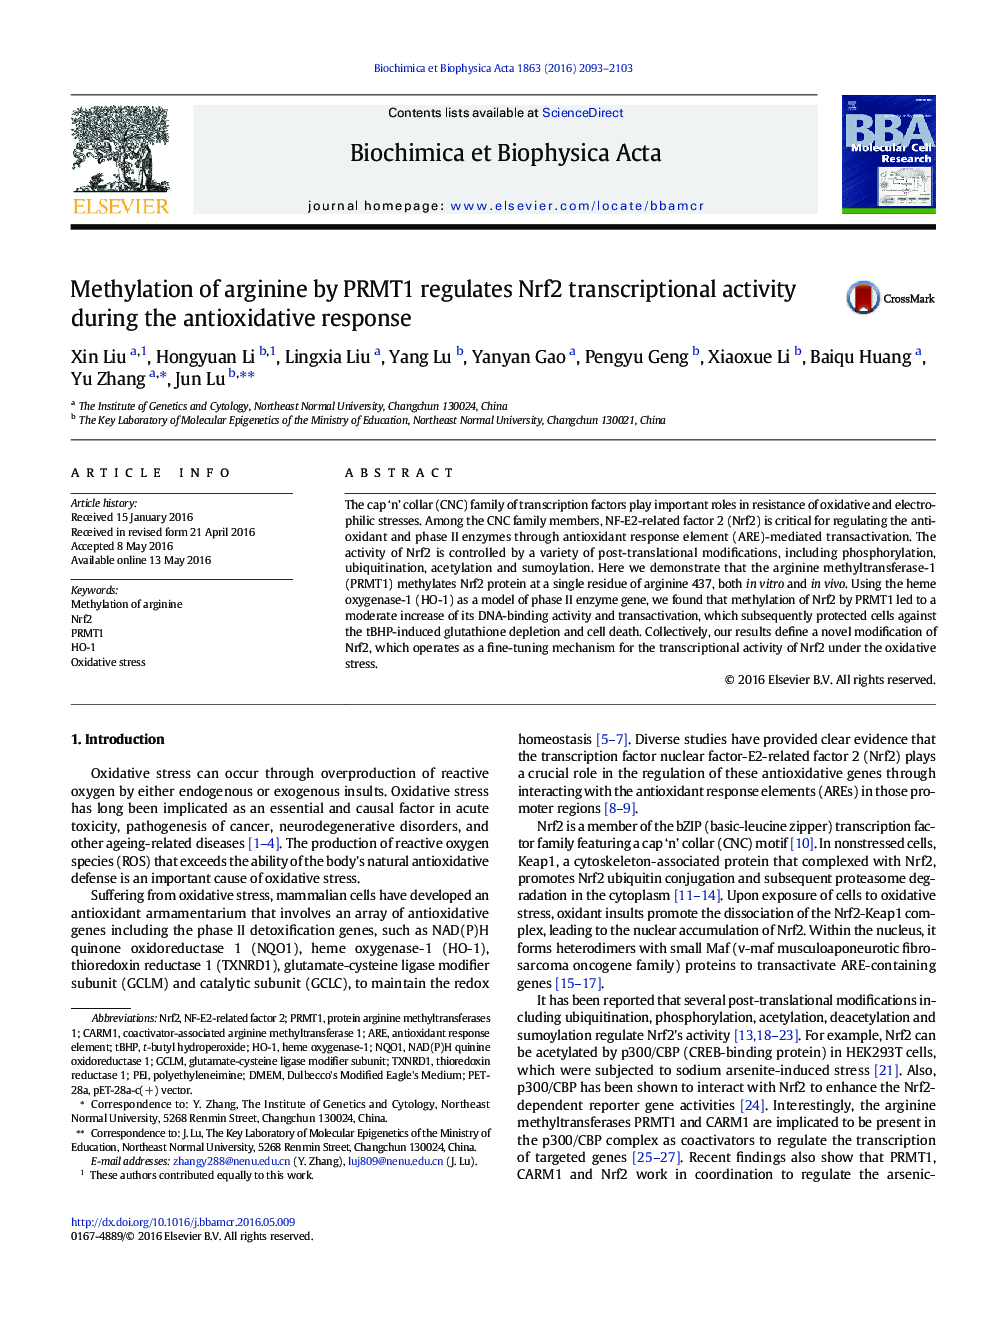 Methylation of arginine by PRMT1 regulates Nrf2 transcriptional activity during the antioxidative response